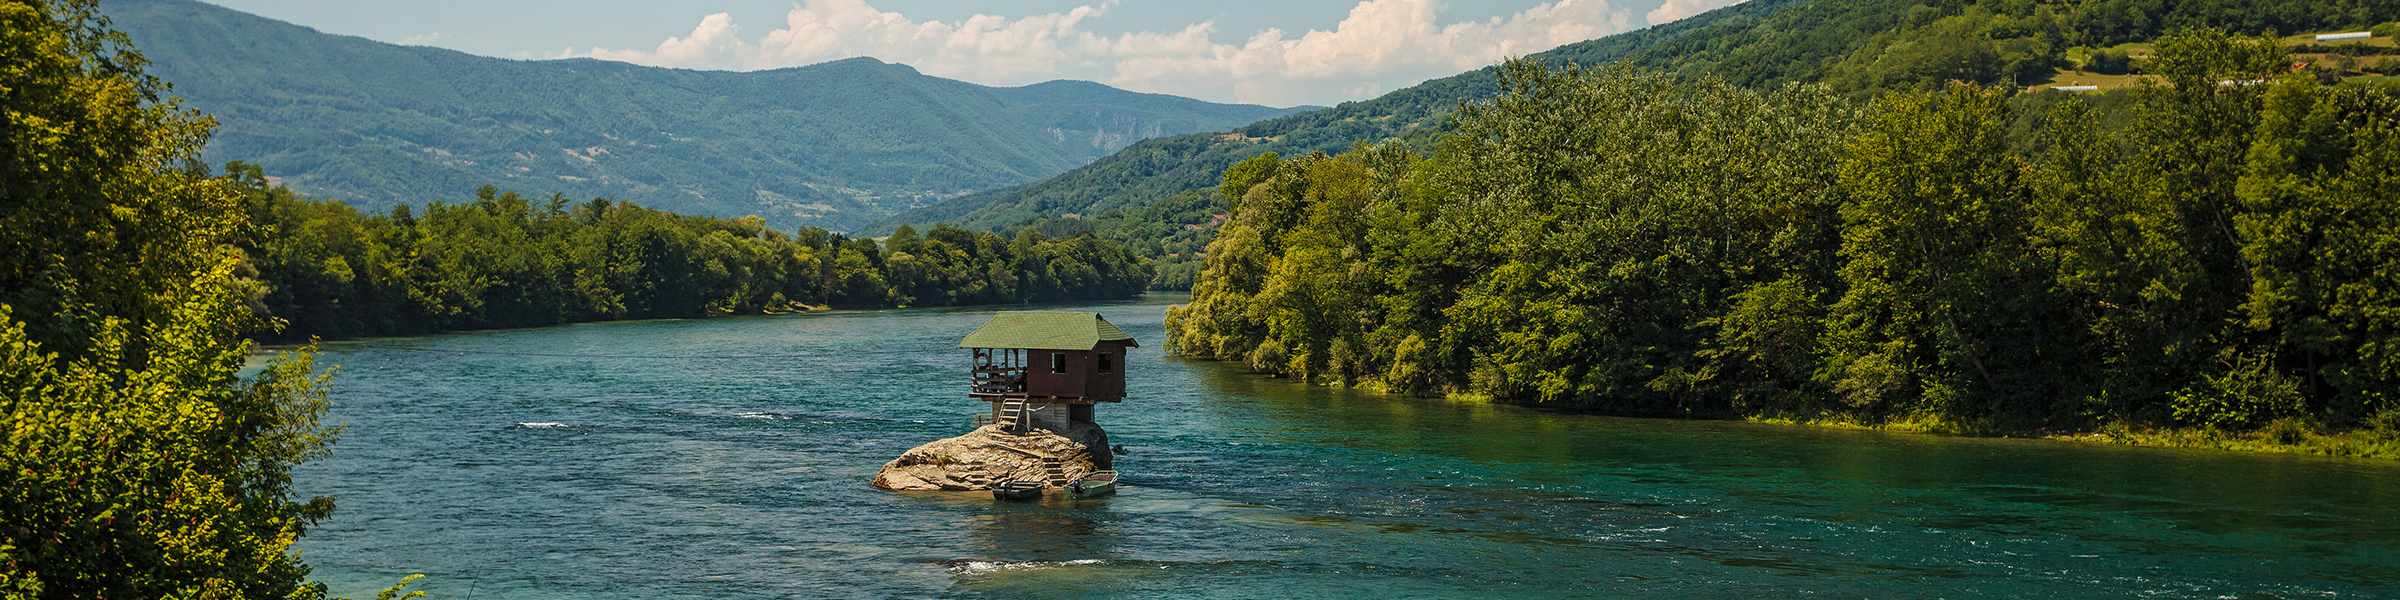 Serbia Tara National Park Drina River